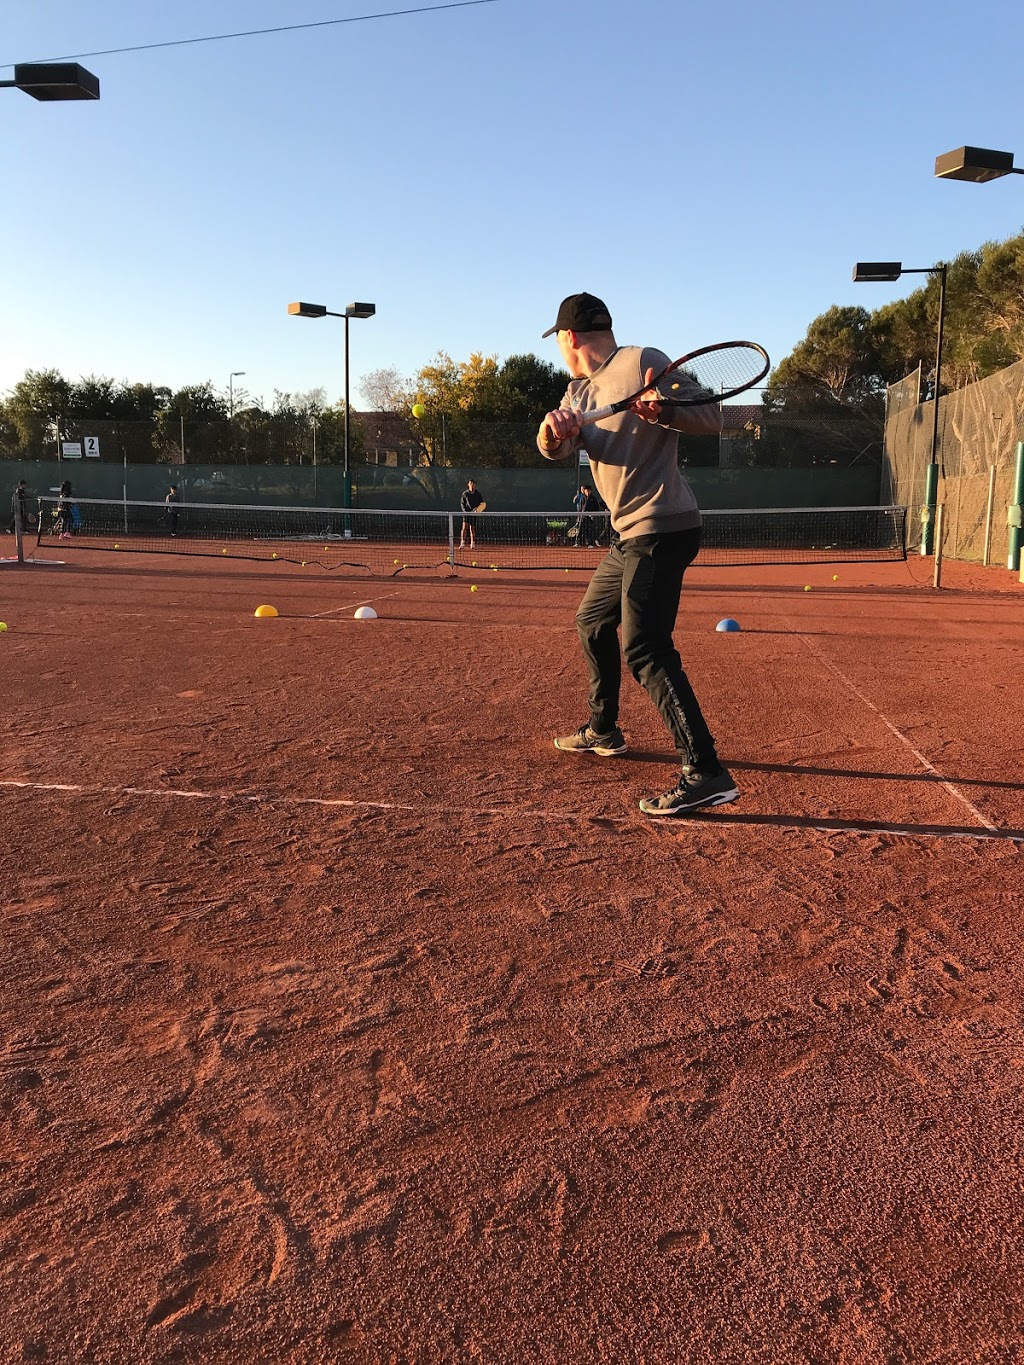 Waverley Tennis Coaching | Whites Lane Tennis Club, 58A Watsons Road, (Club on Whites Lane), Glen Waverley VIC 3150, Australia | Phone: 0420 946 465